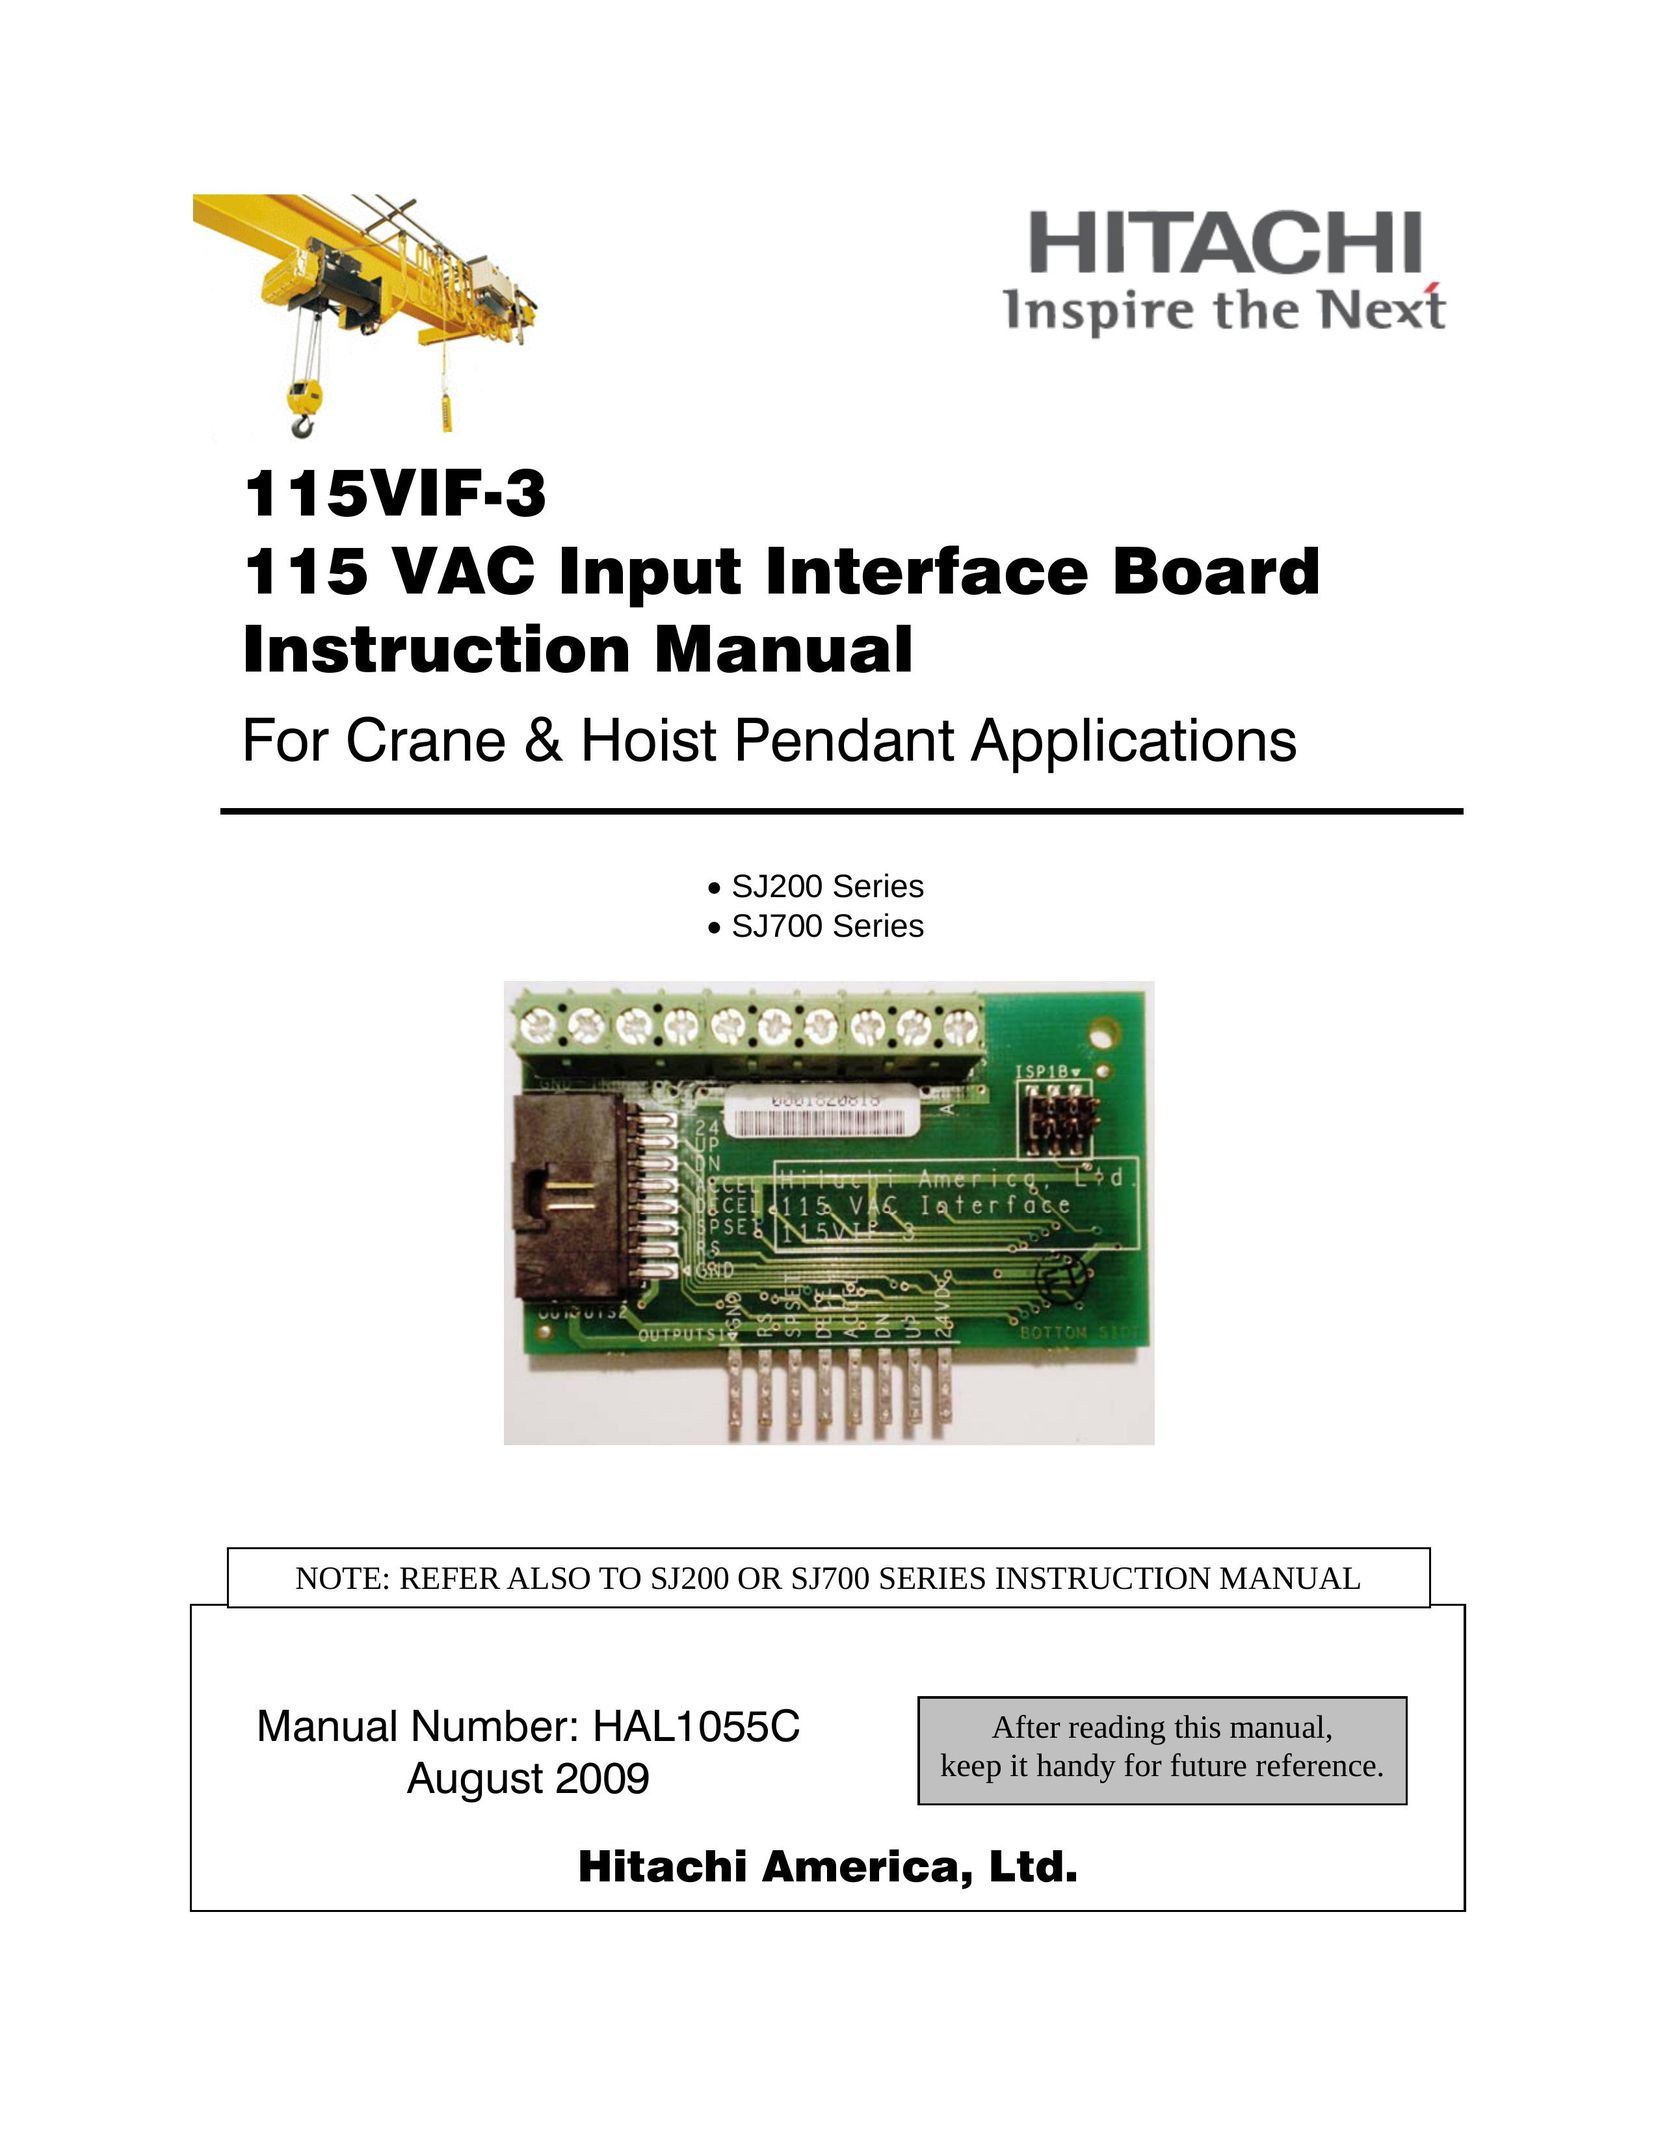 Hitachi 115VIF-3 Network Router User Manual